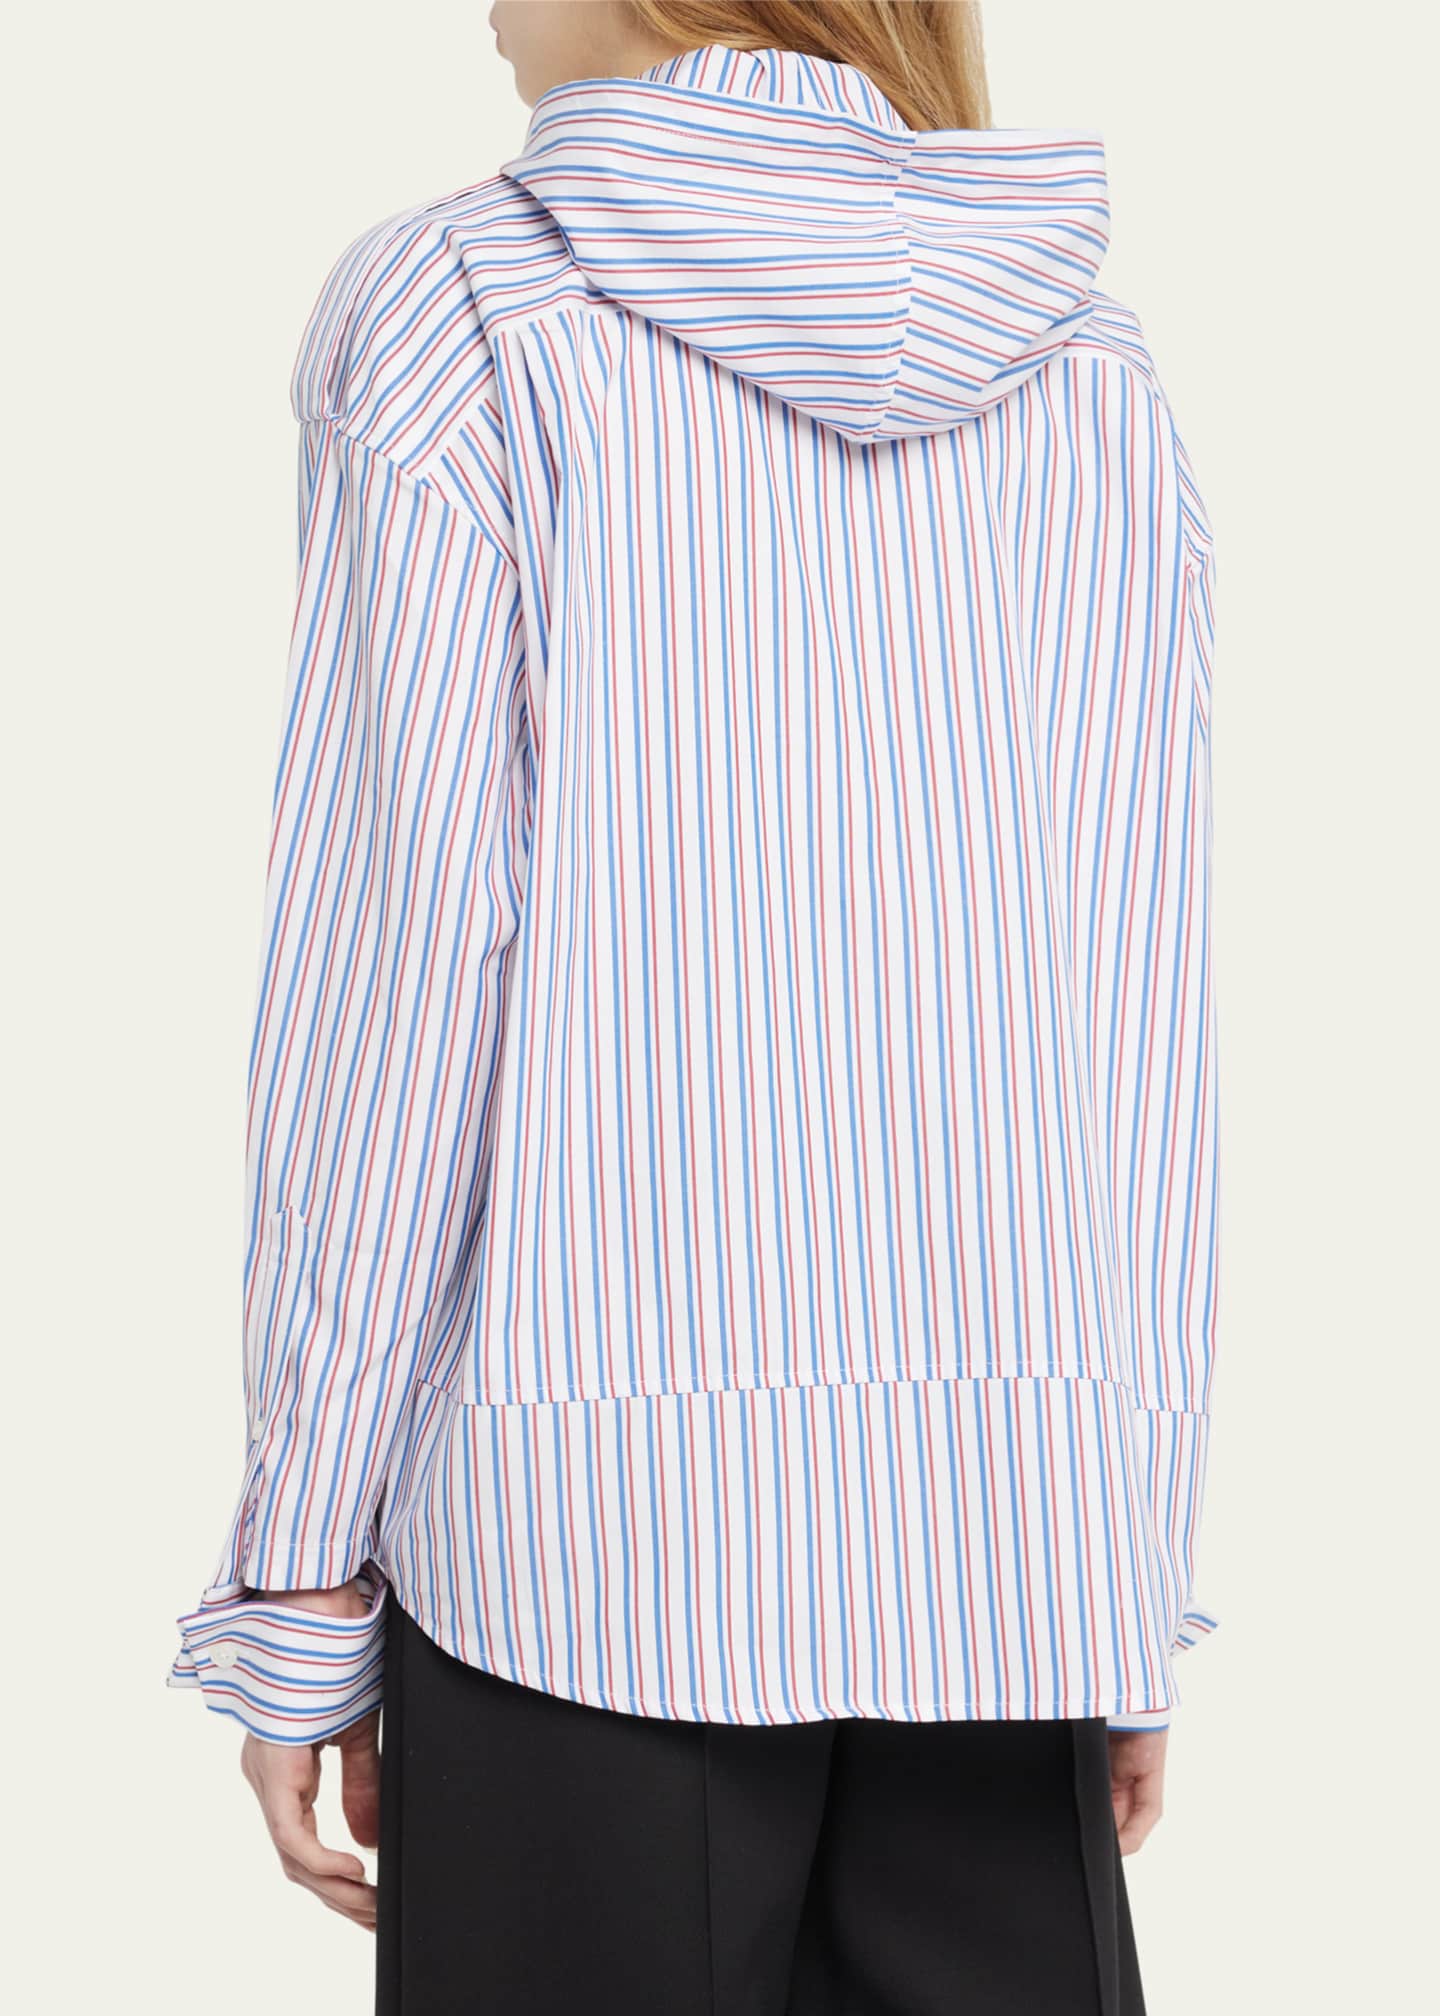 MERYLL ROGGE Stripe Deconstructed Men's Shirt with Hood